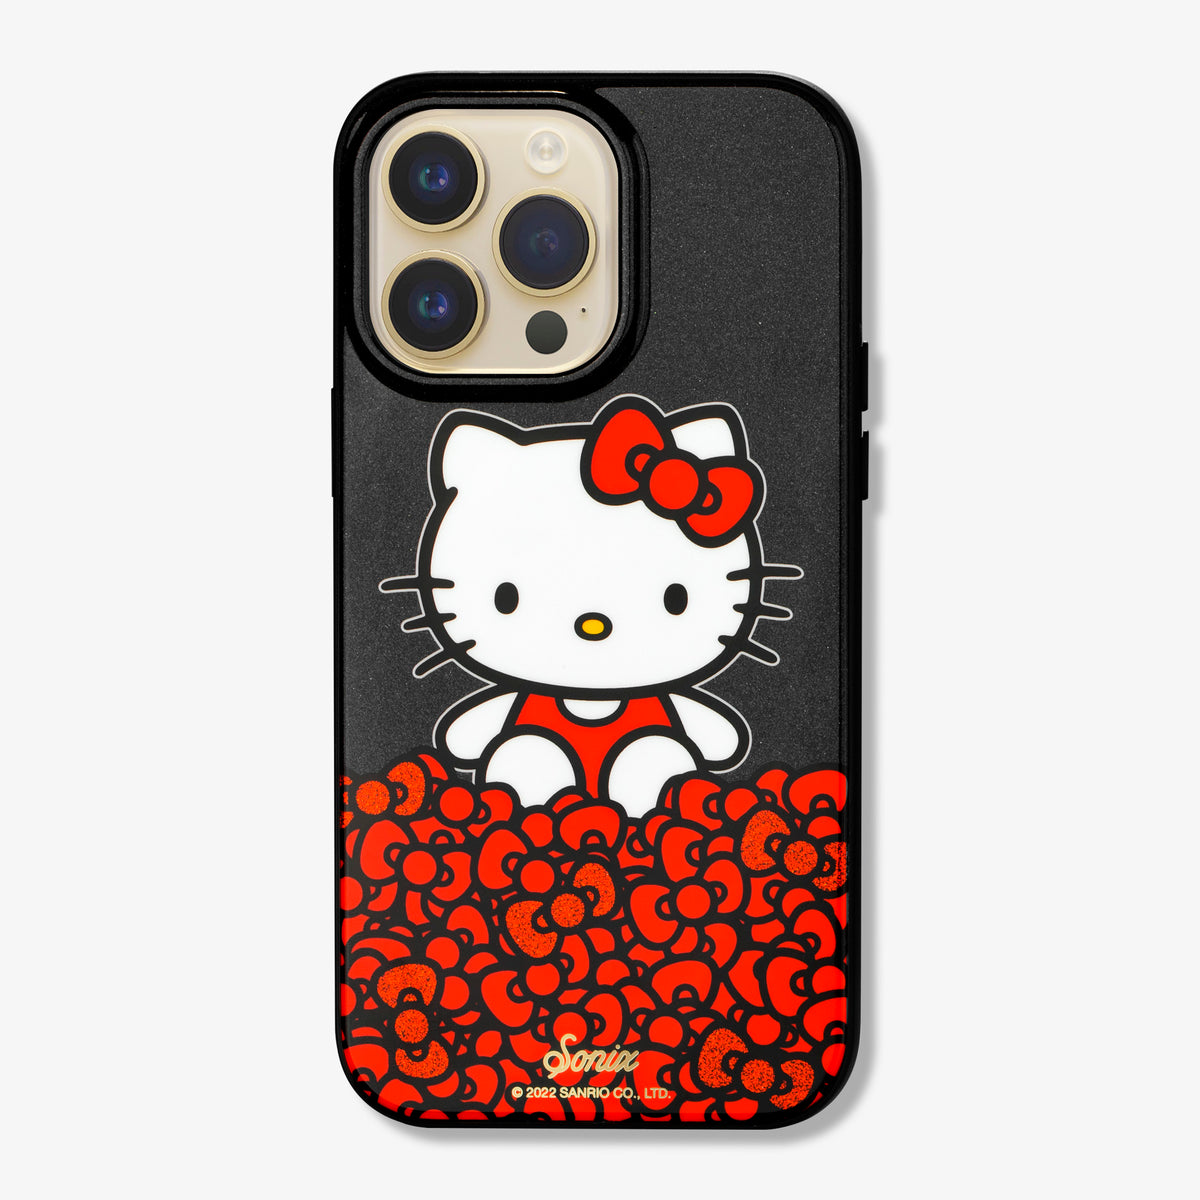 Hello Kitty x Sonix Apples Detachable Wallet Case